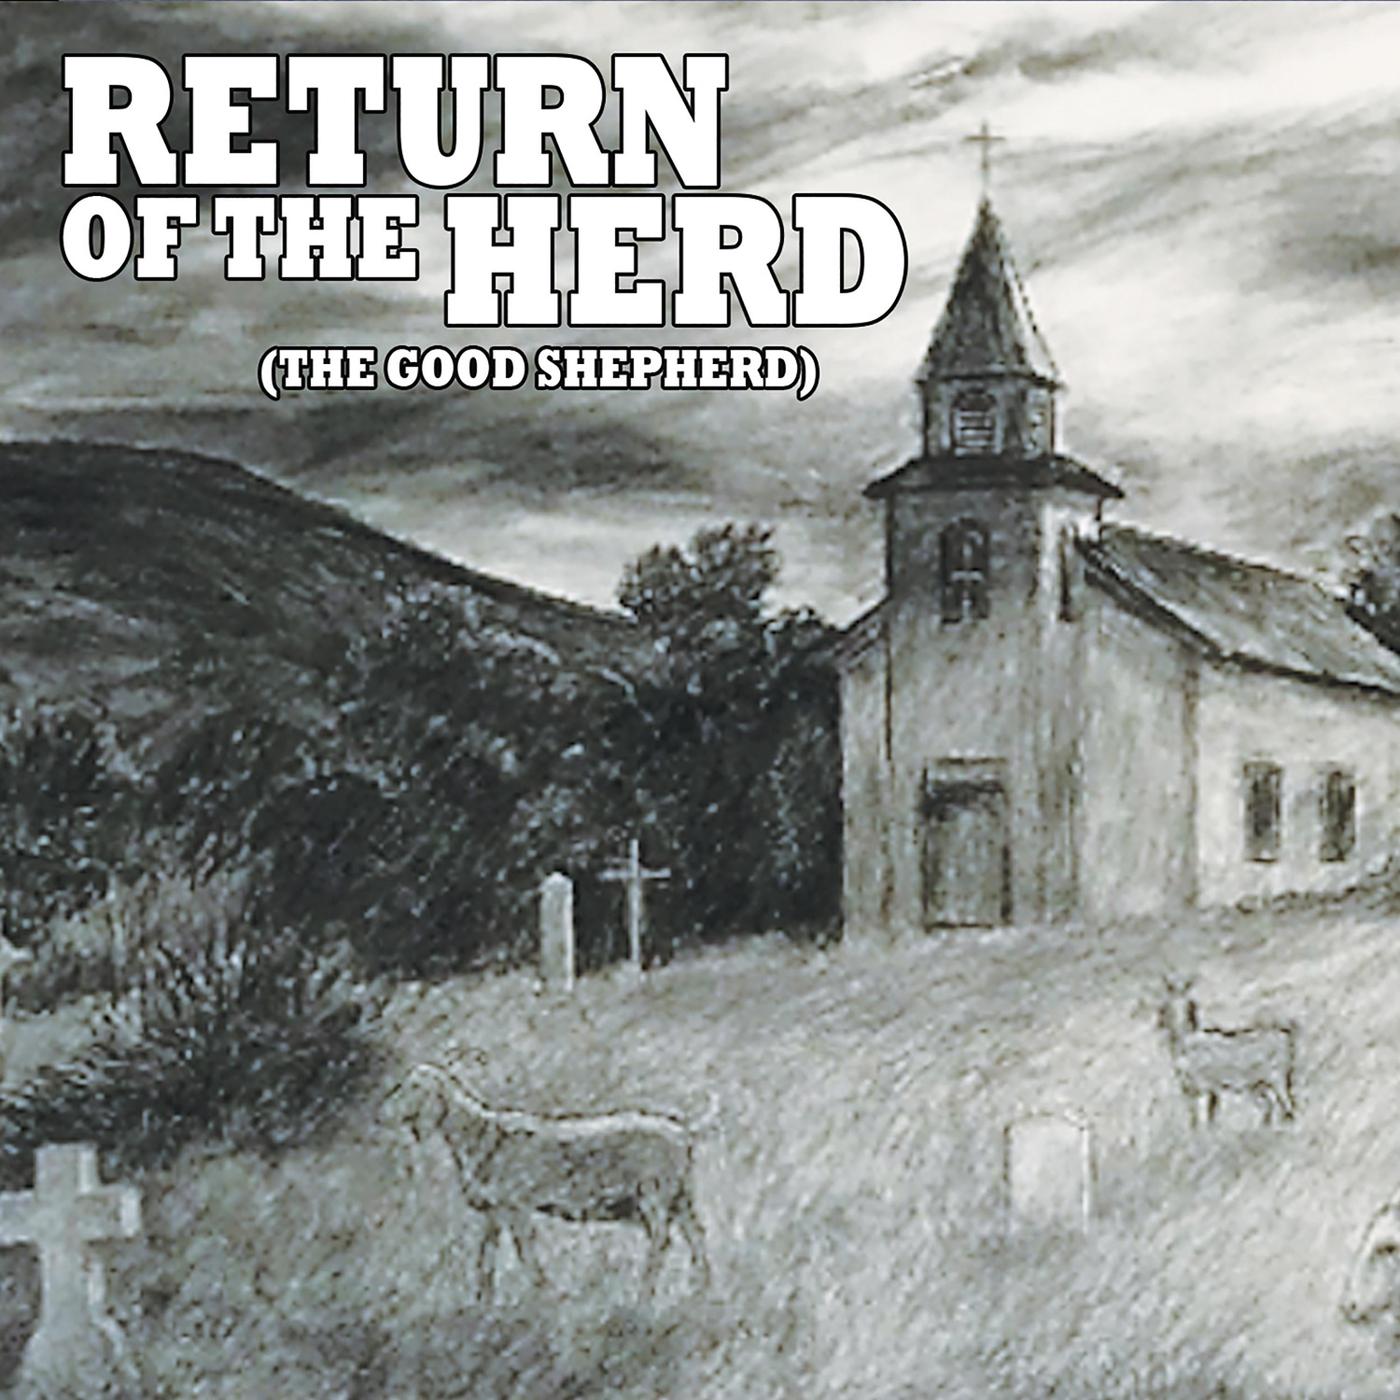 Return of the Herd (The Good Shepherd)